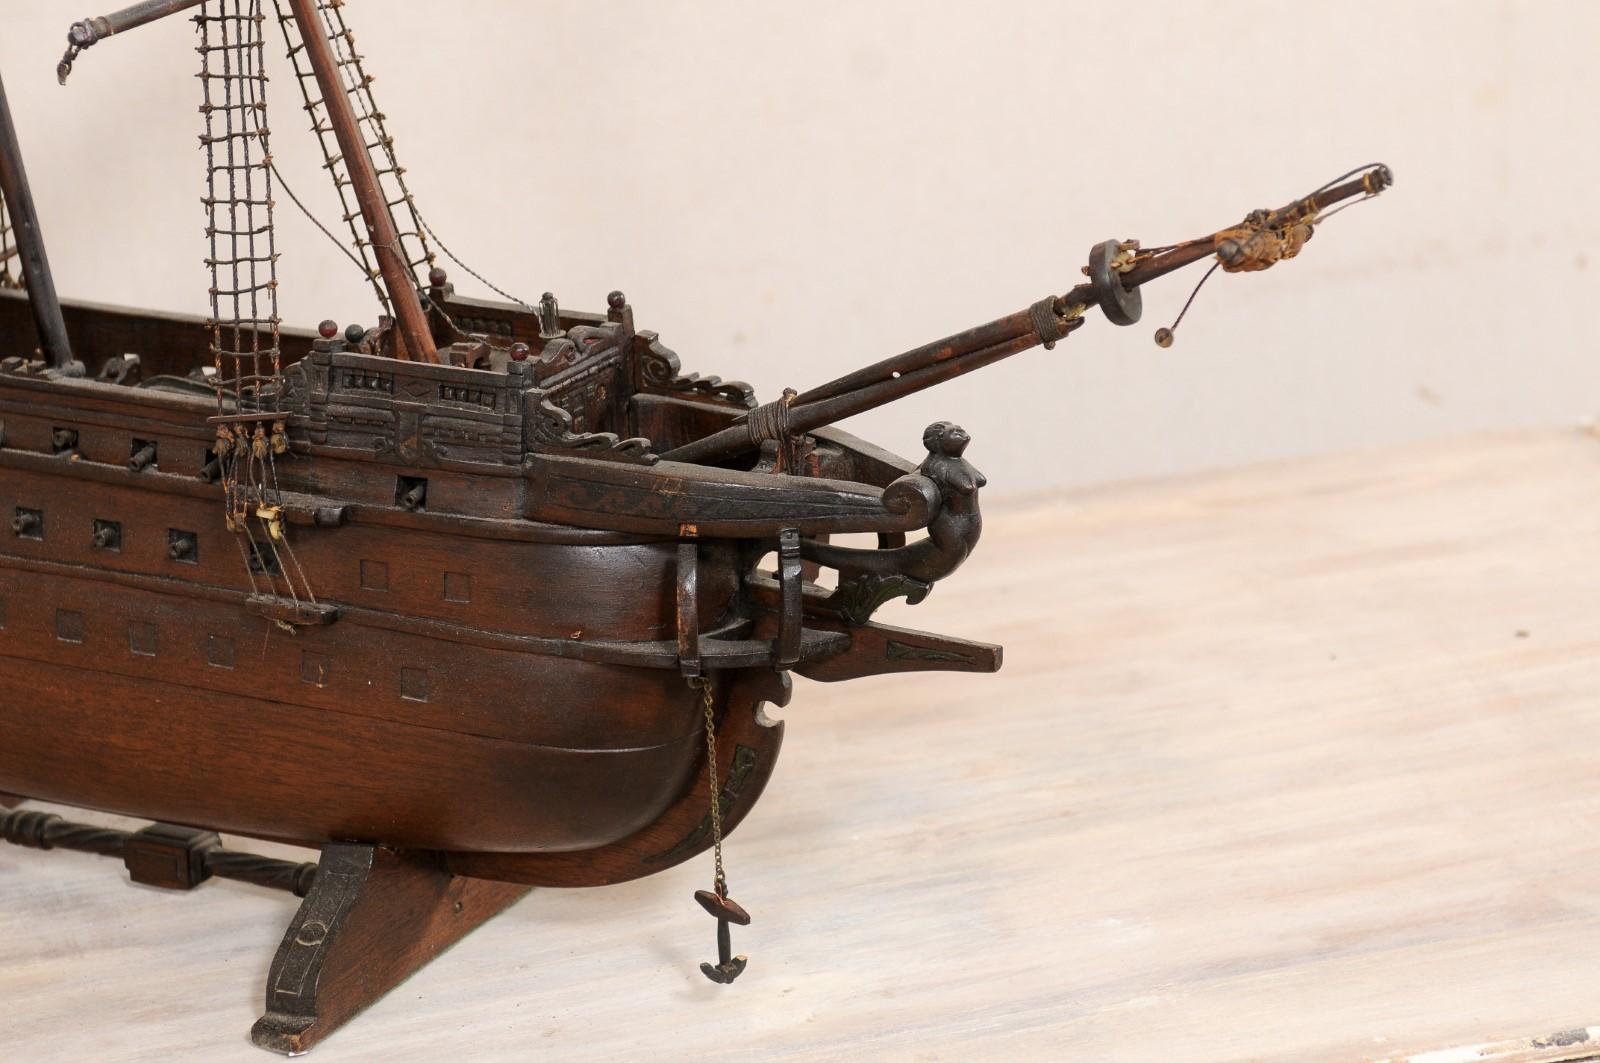 Italian Wooden Ship Model of a 15th/16th C. Galleon, Tall Ship, 3-Masat Schooner For Sale 1